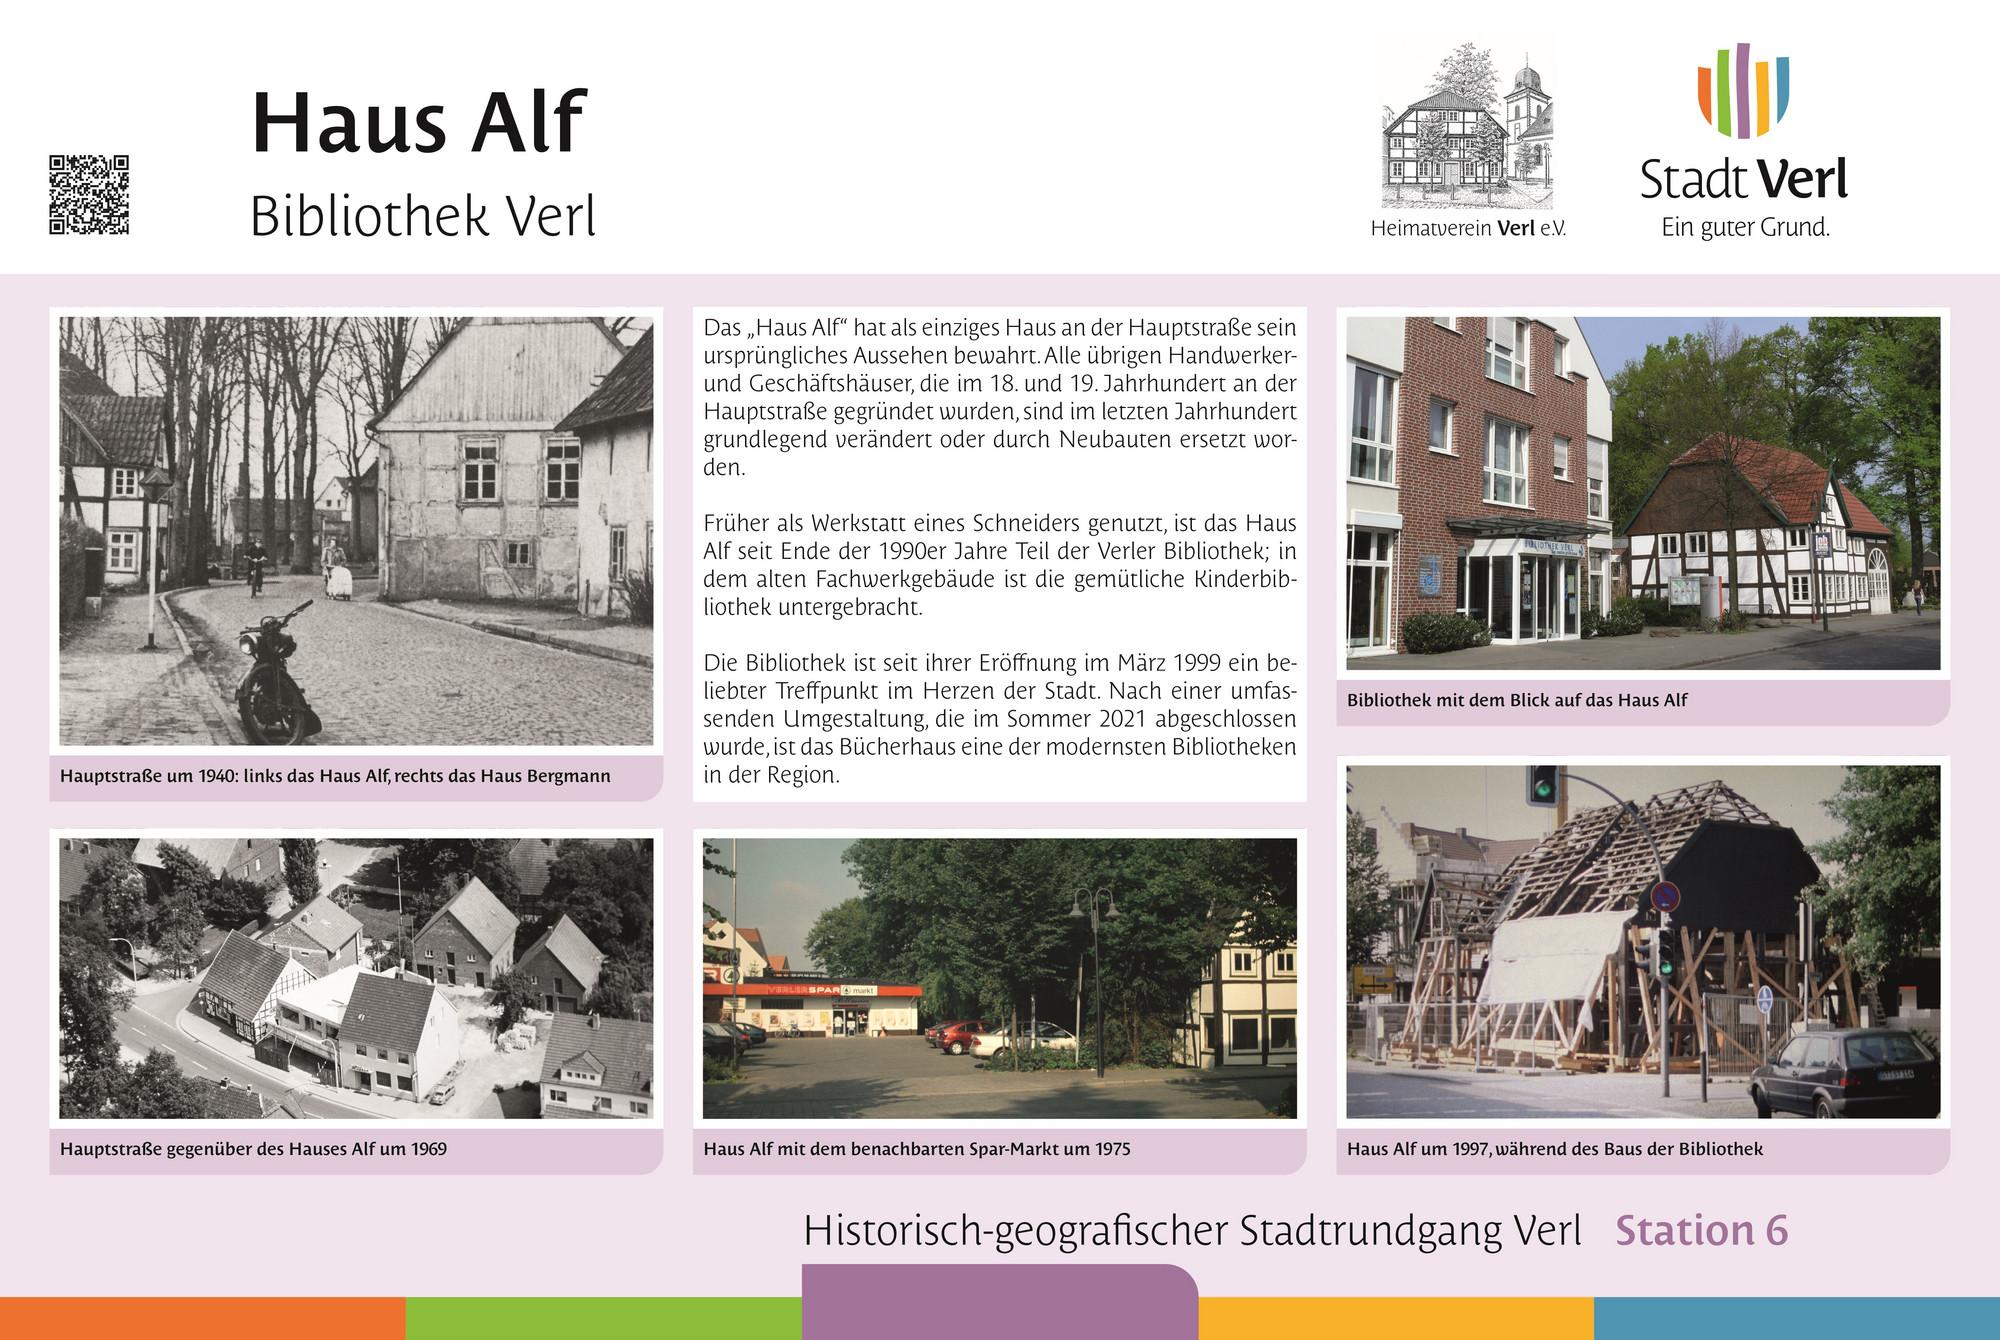 Station 6: Haus Alf